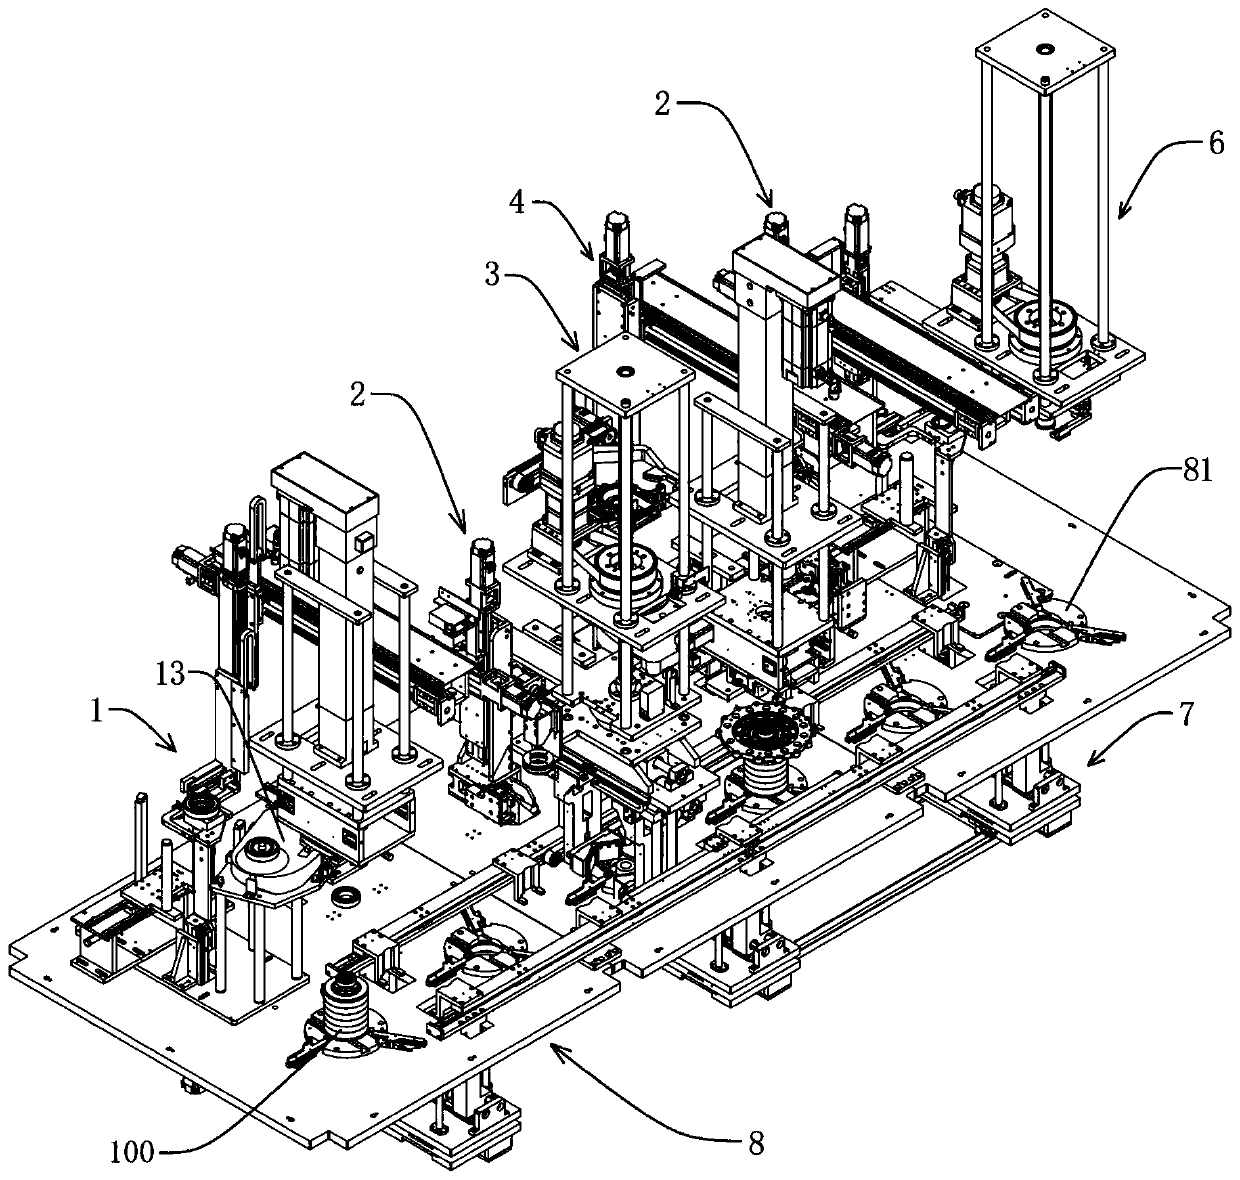 Multi-station transfer mechanism and motor bearing assembly equipment